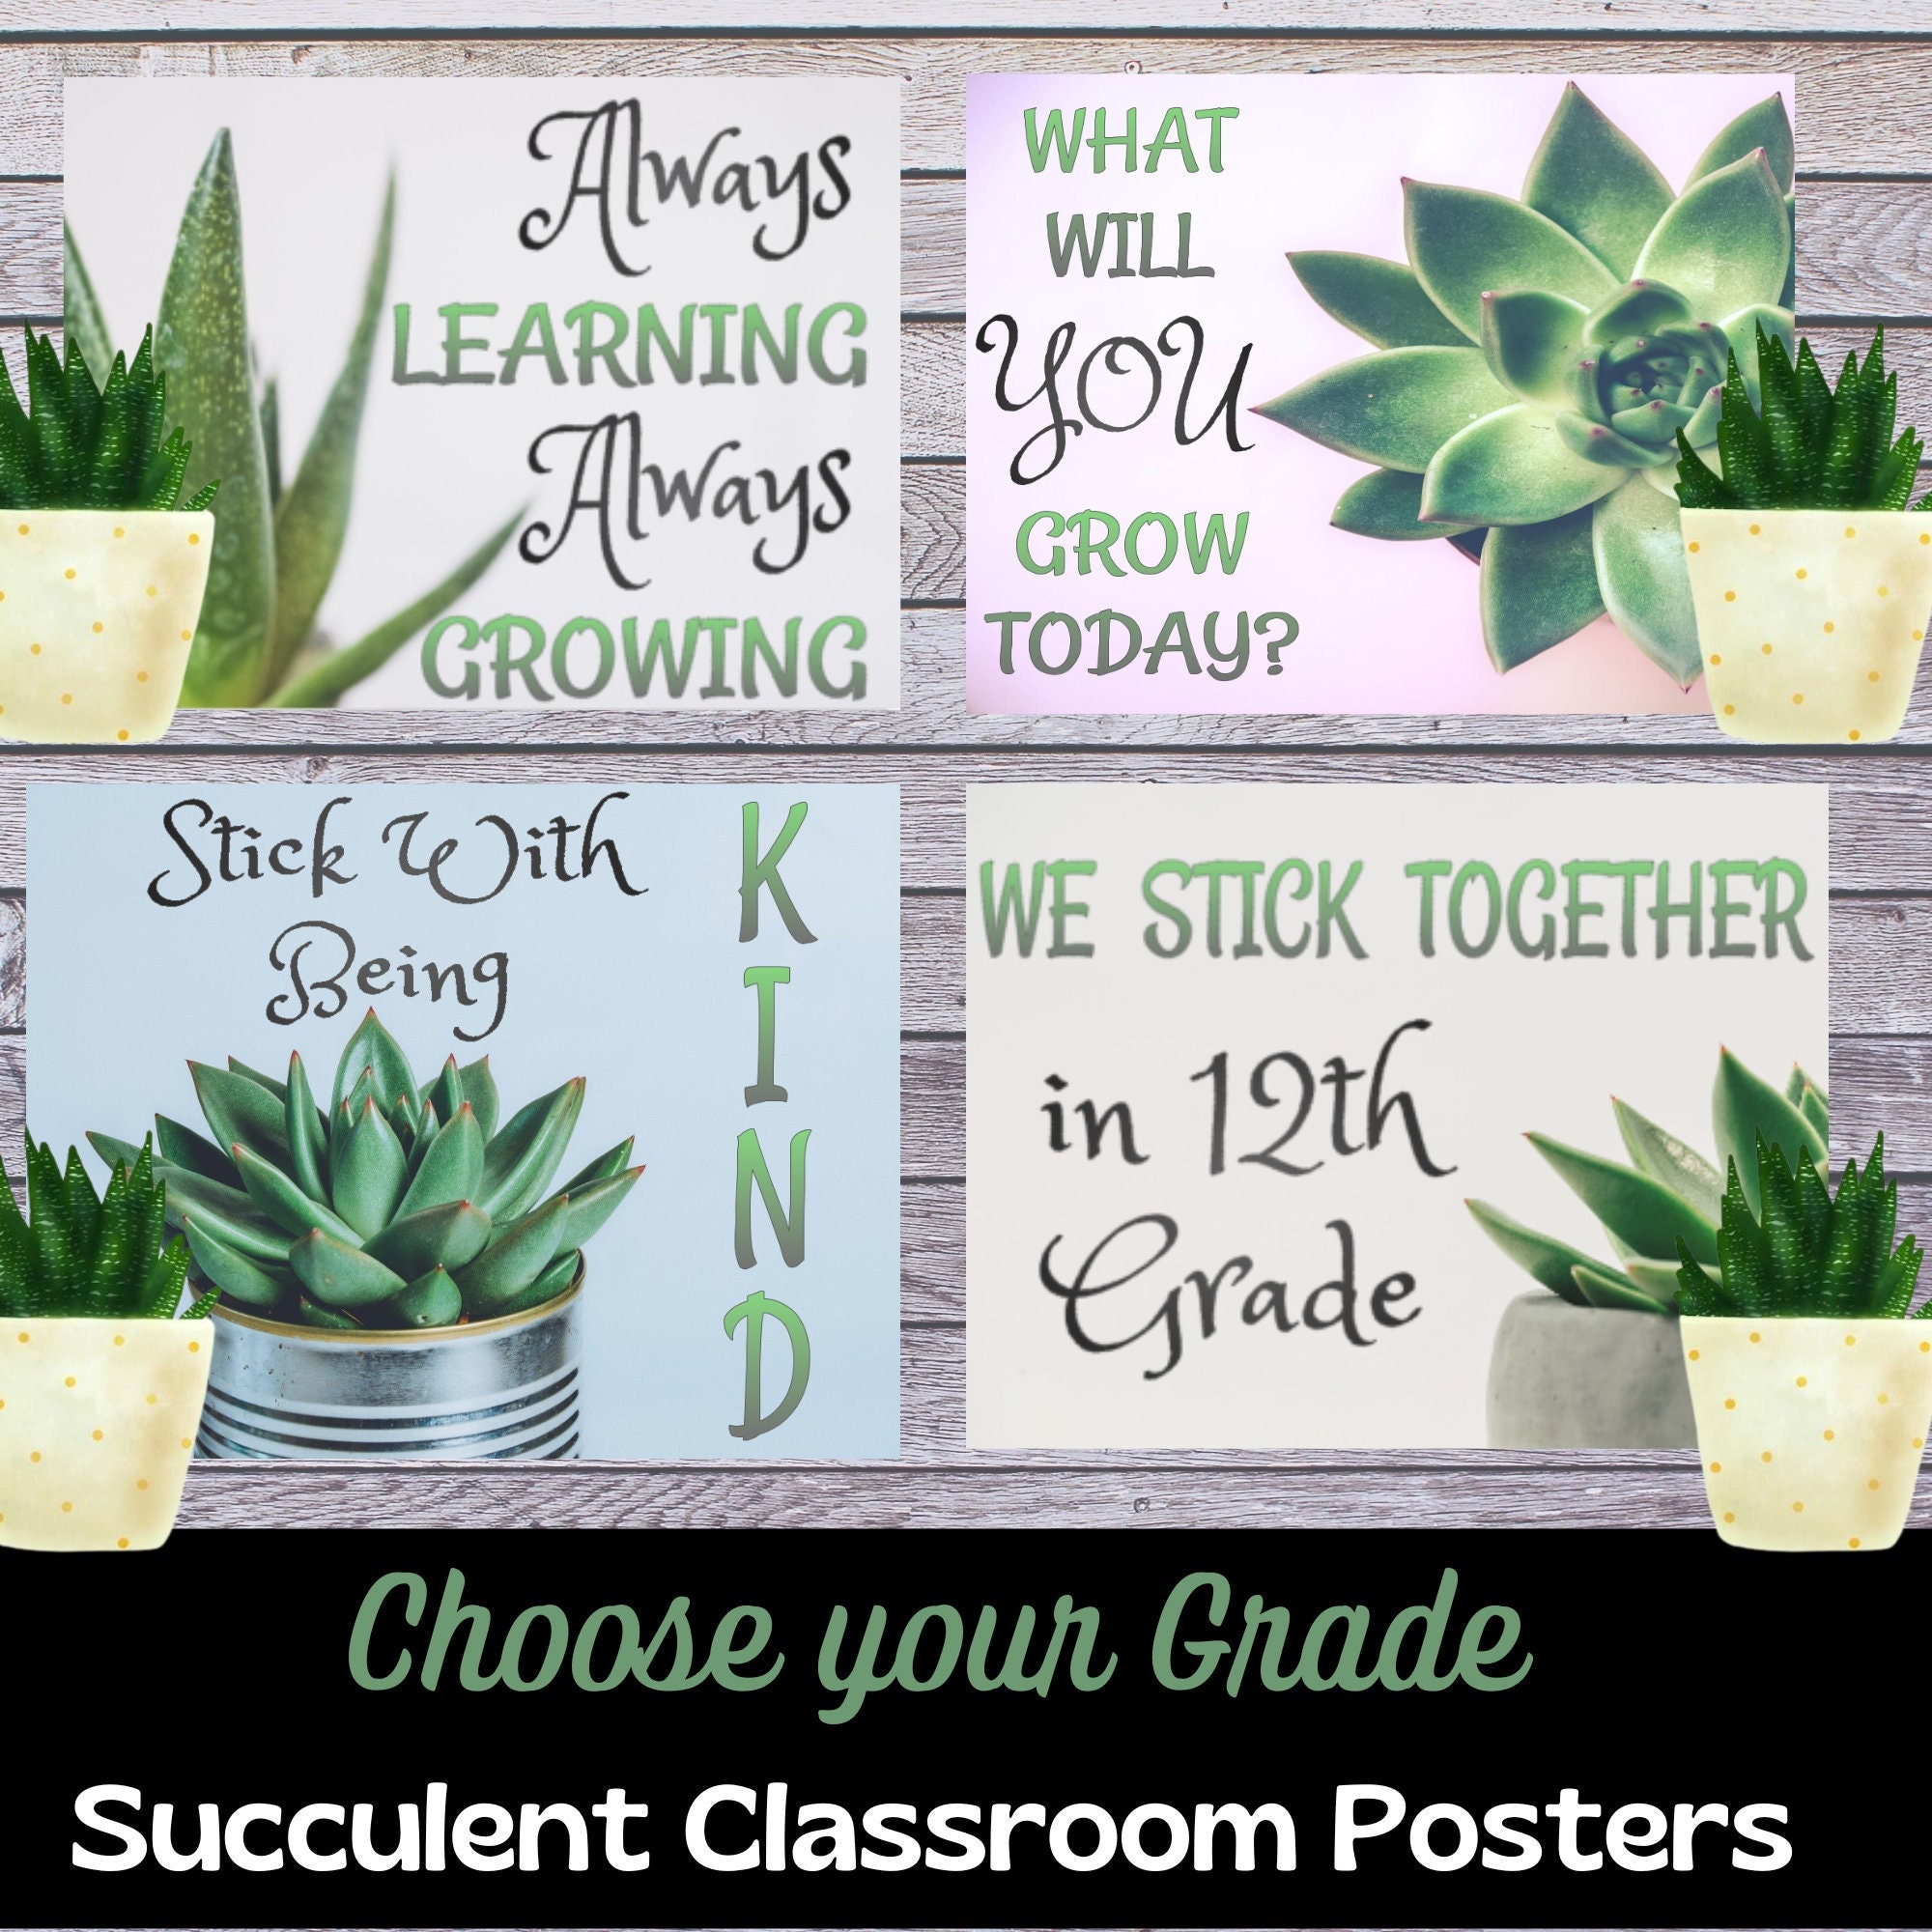 Spring Garden Classroom Decor A-Z Bulletin Board Letters